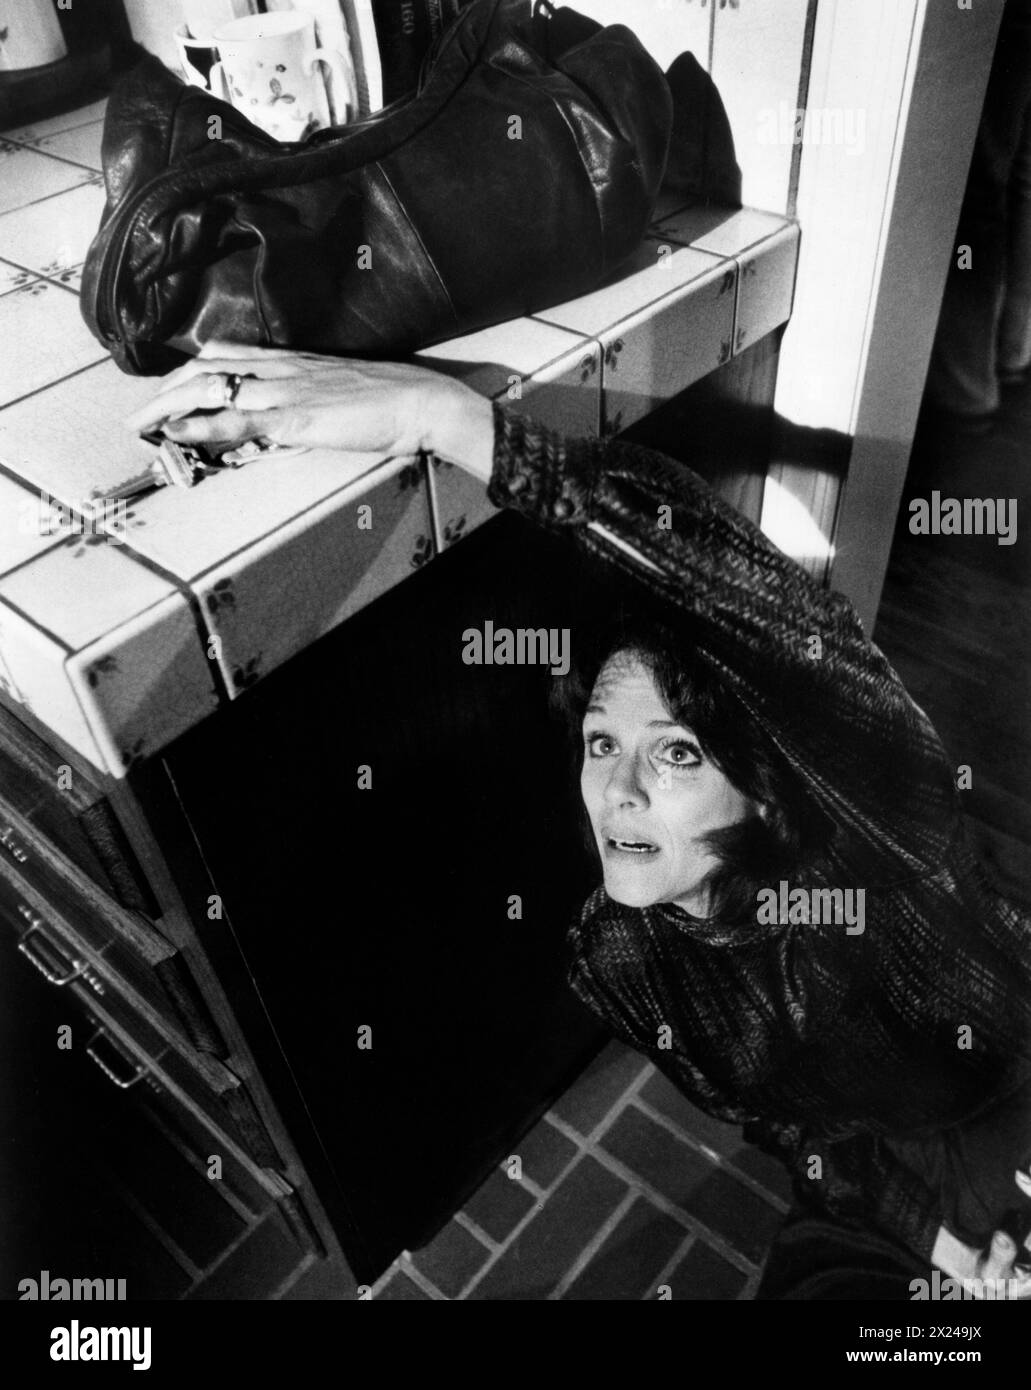 Valerie Harper, sul set del film televisivo "Don't Go to Sleep", Warner Bros., ABC-TV, 1982 Foto Stock